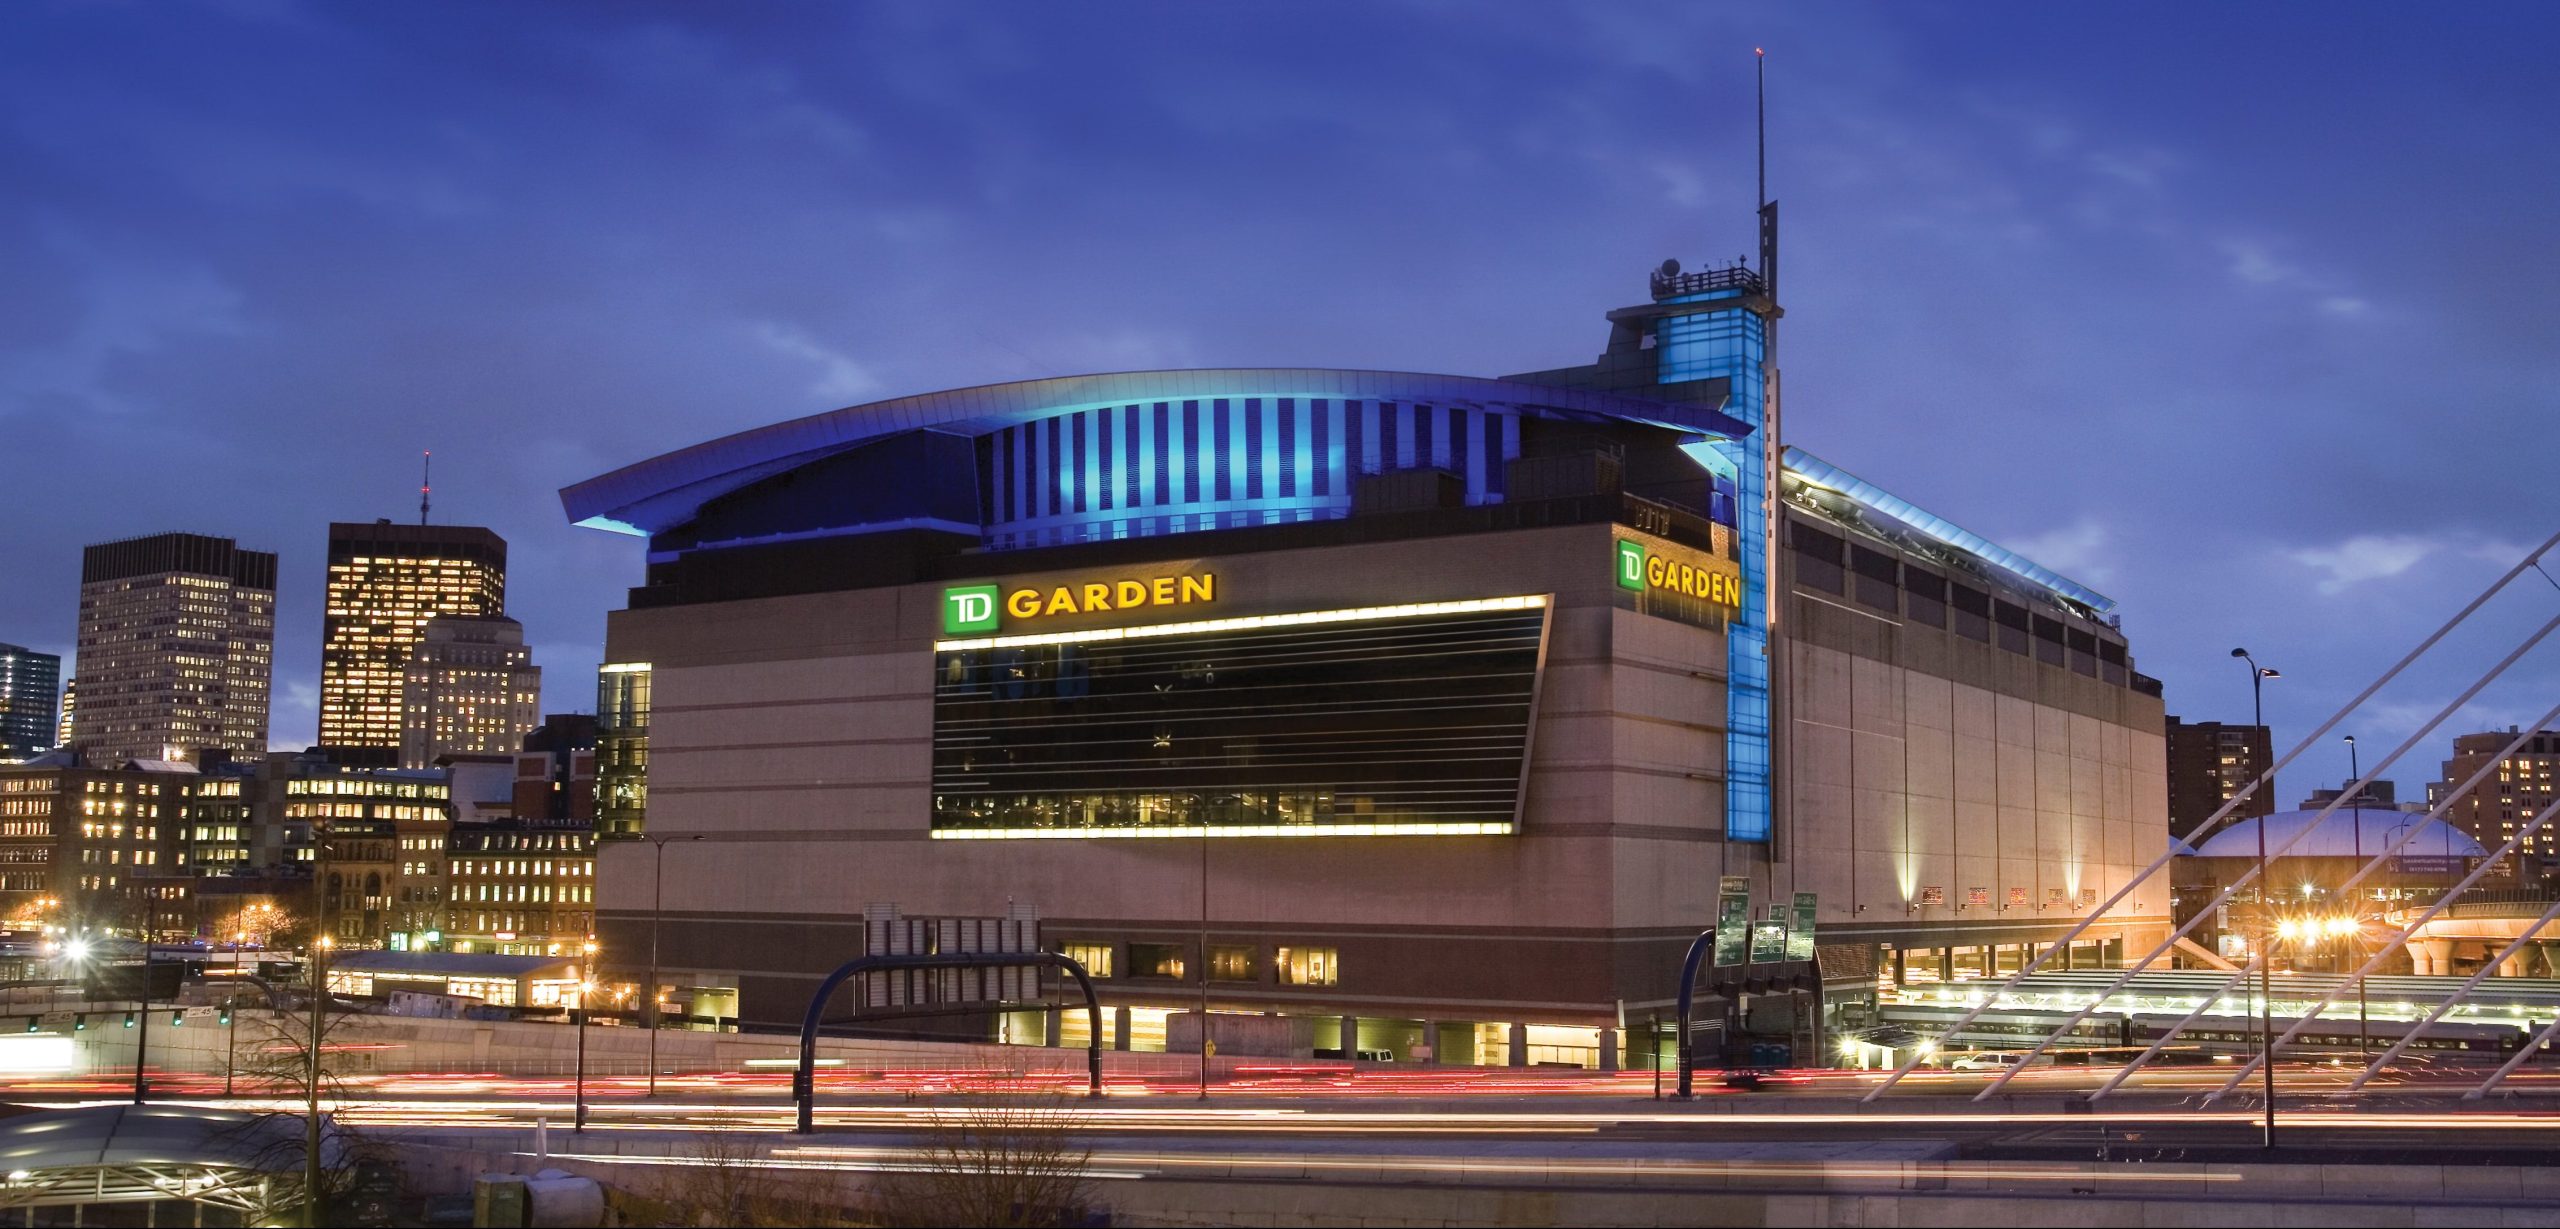 Td Garden Boston Celtics Event Parking